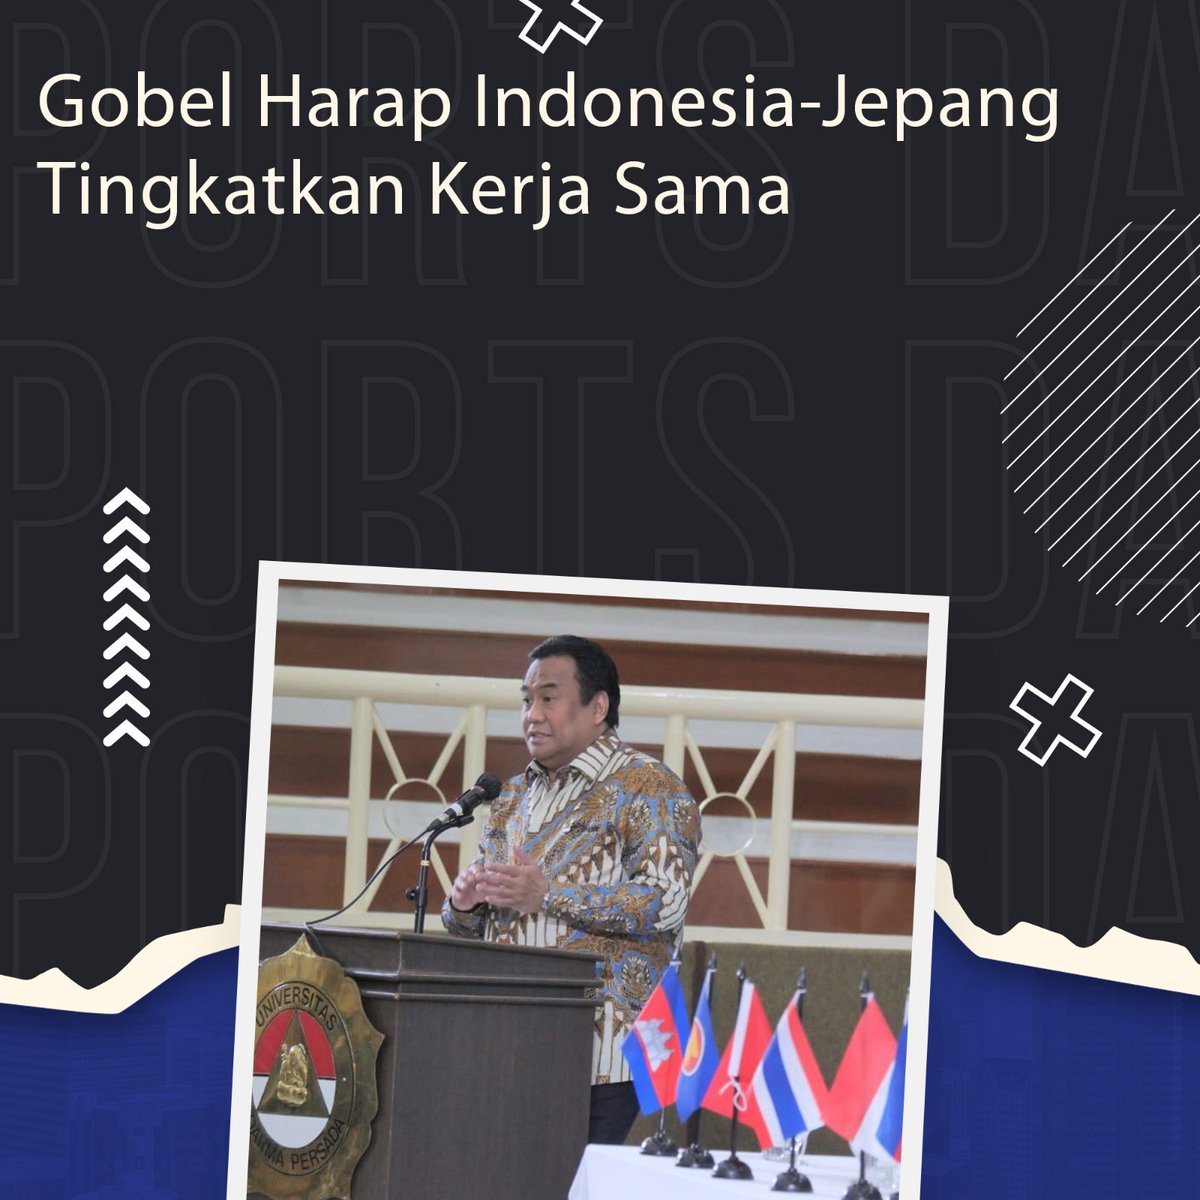 Bagus kalau Indonesia Jepang kerjasama #ItsTimeRestorasiIndonesia
#NasdemNo5
#AniesPresidenku